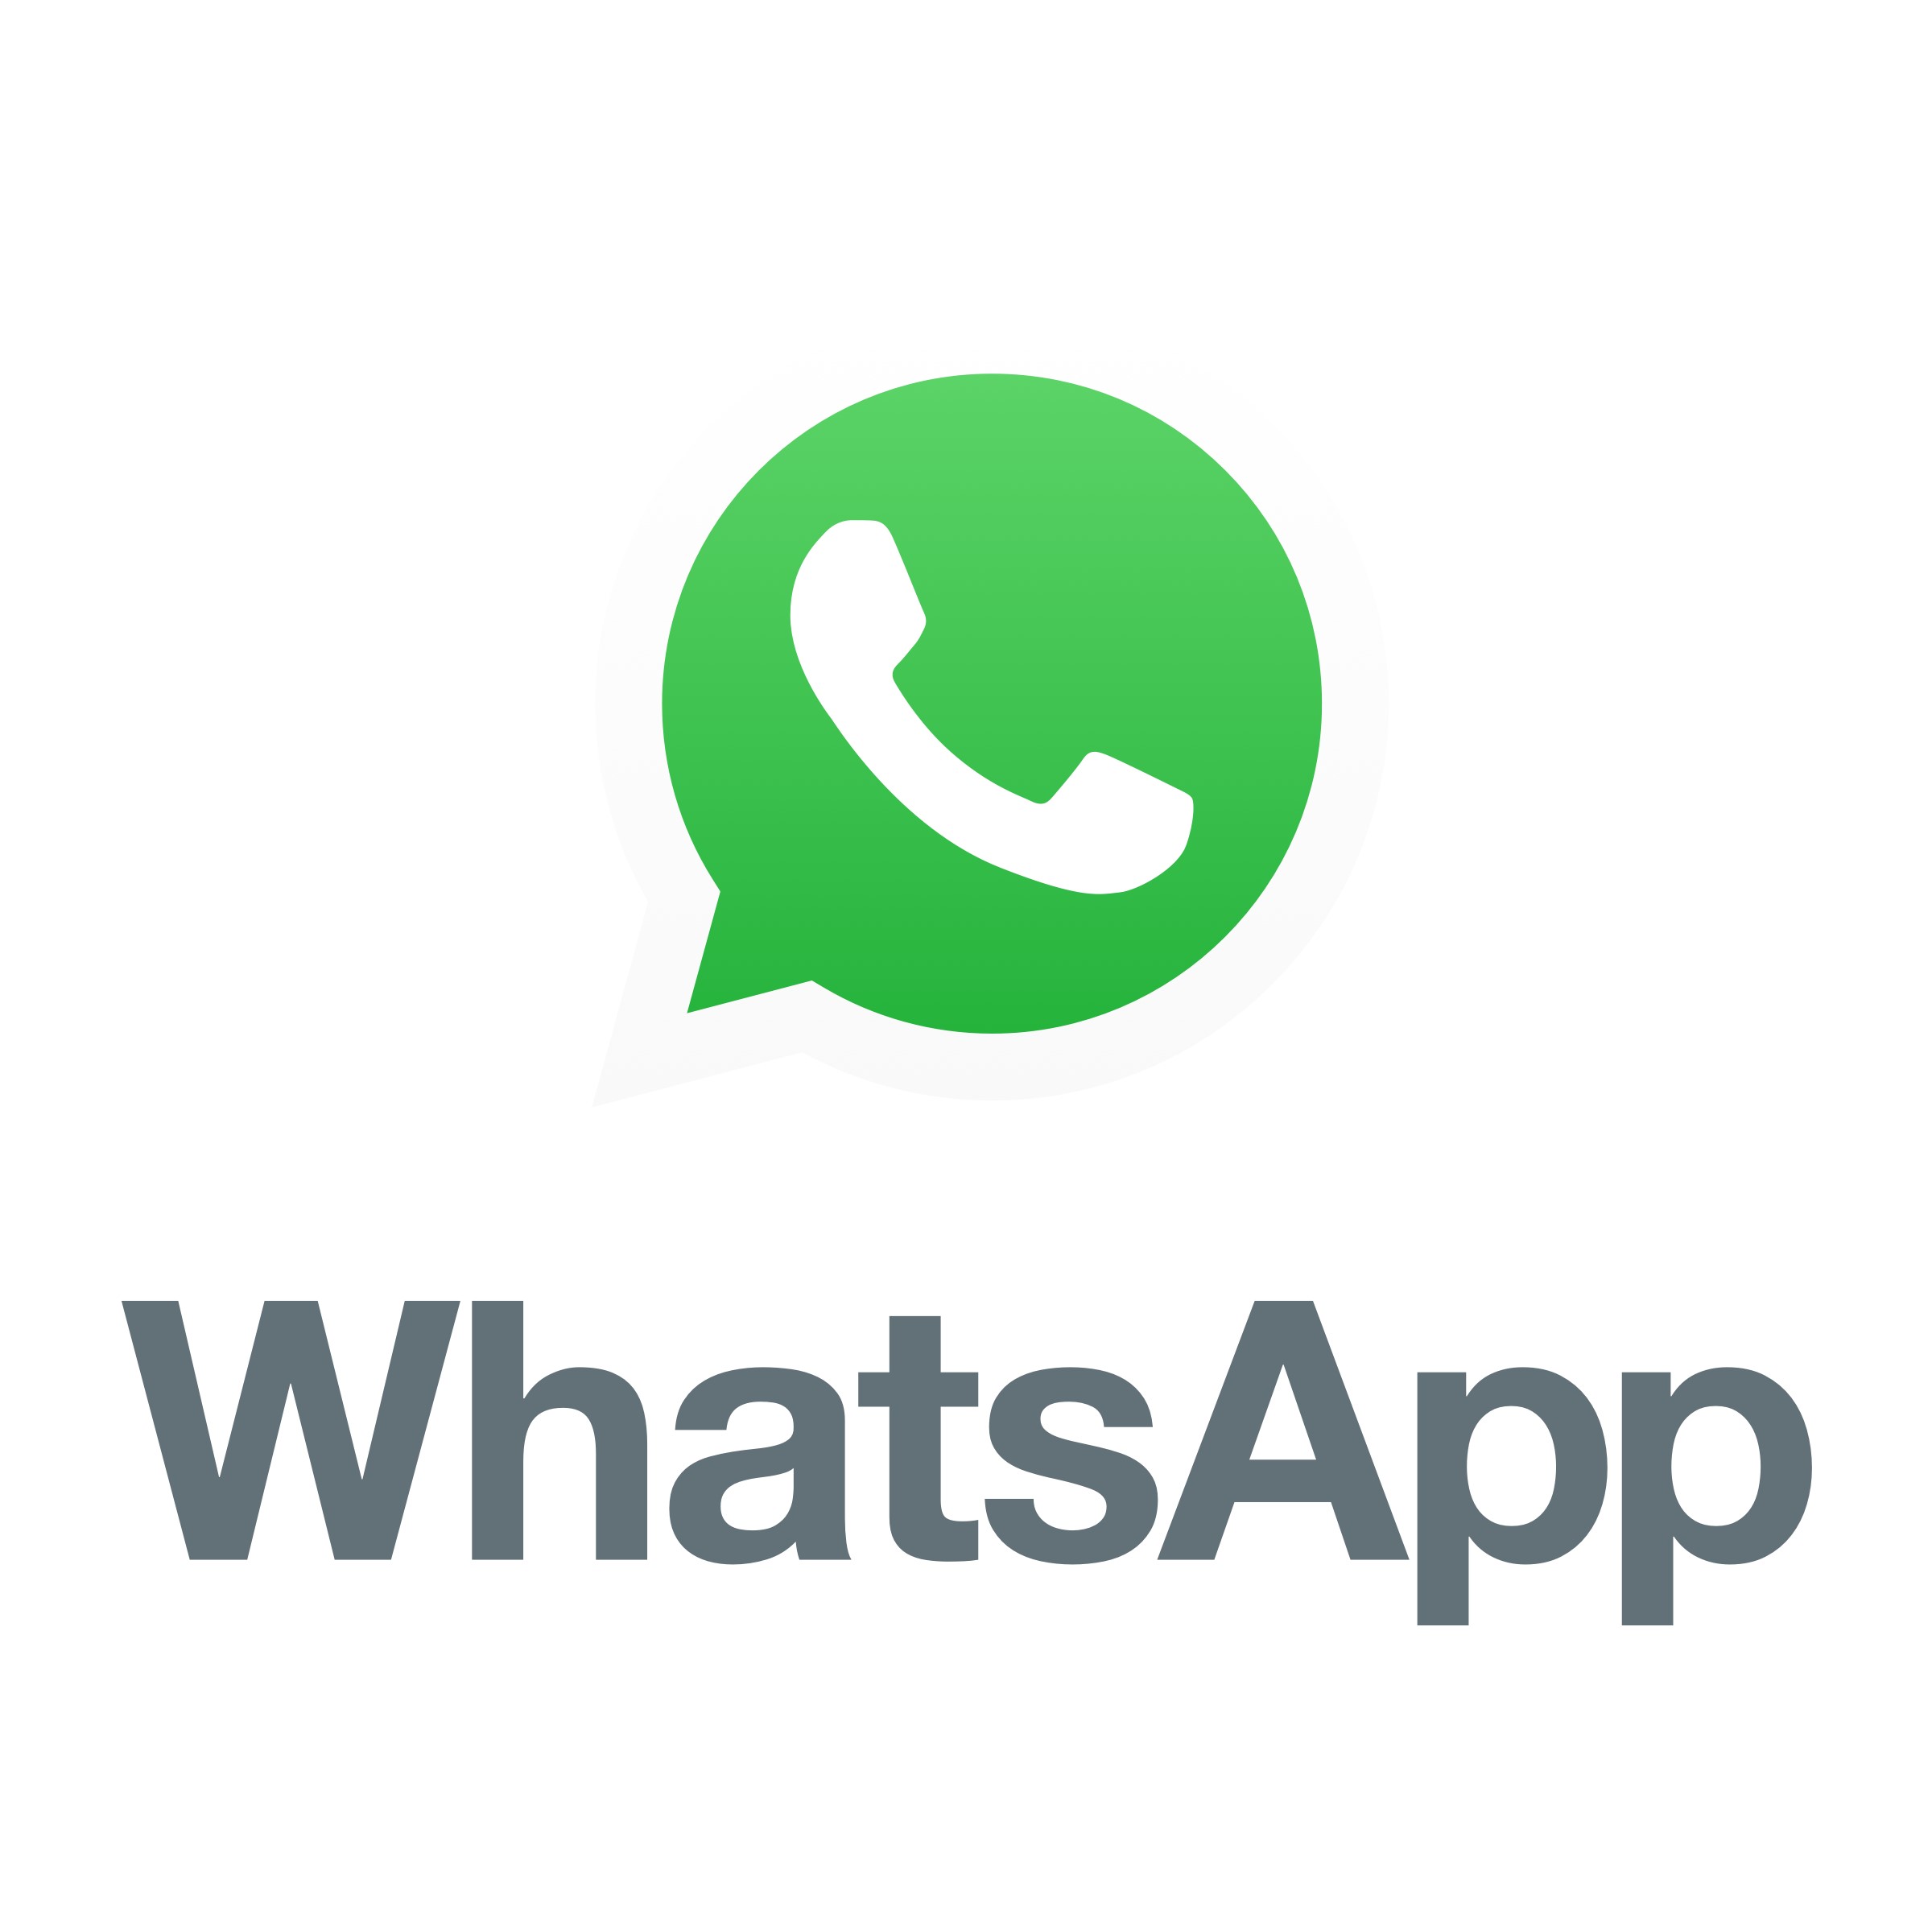 1. WhatsApp账号批发现象的规模和影响：深入剖析